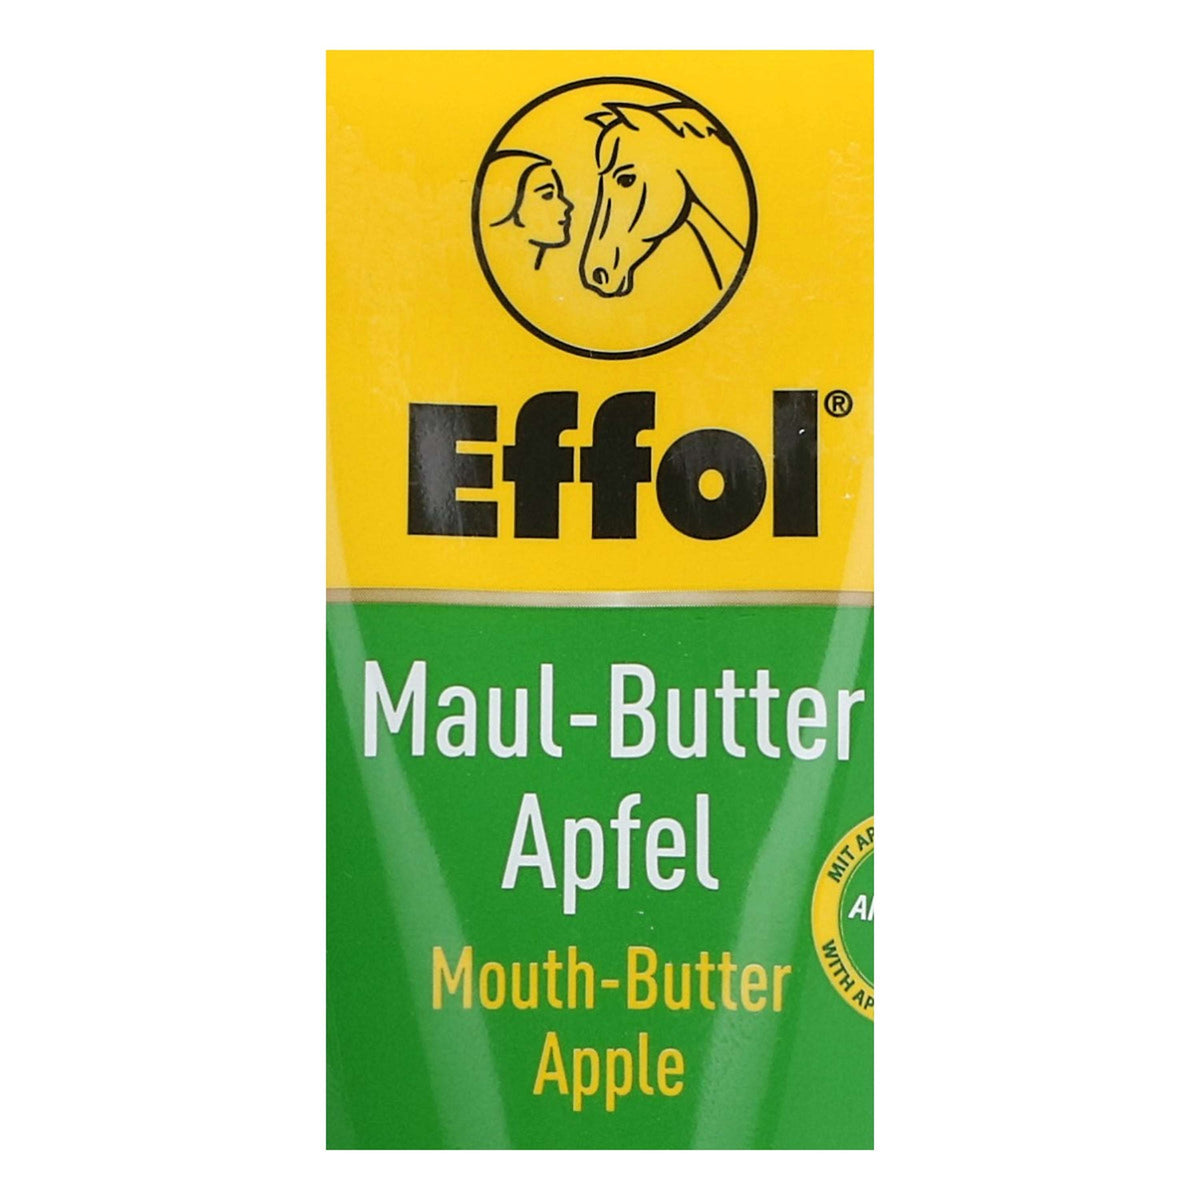 Effol Maul-Butter Apfel